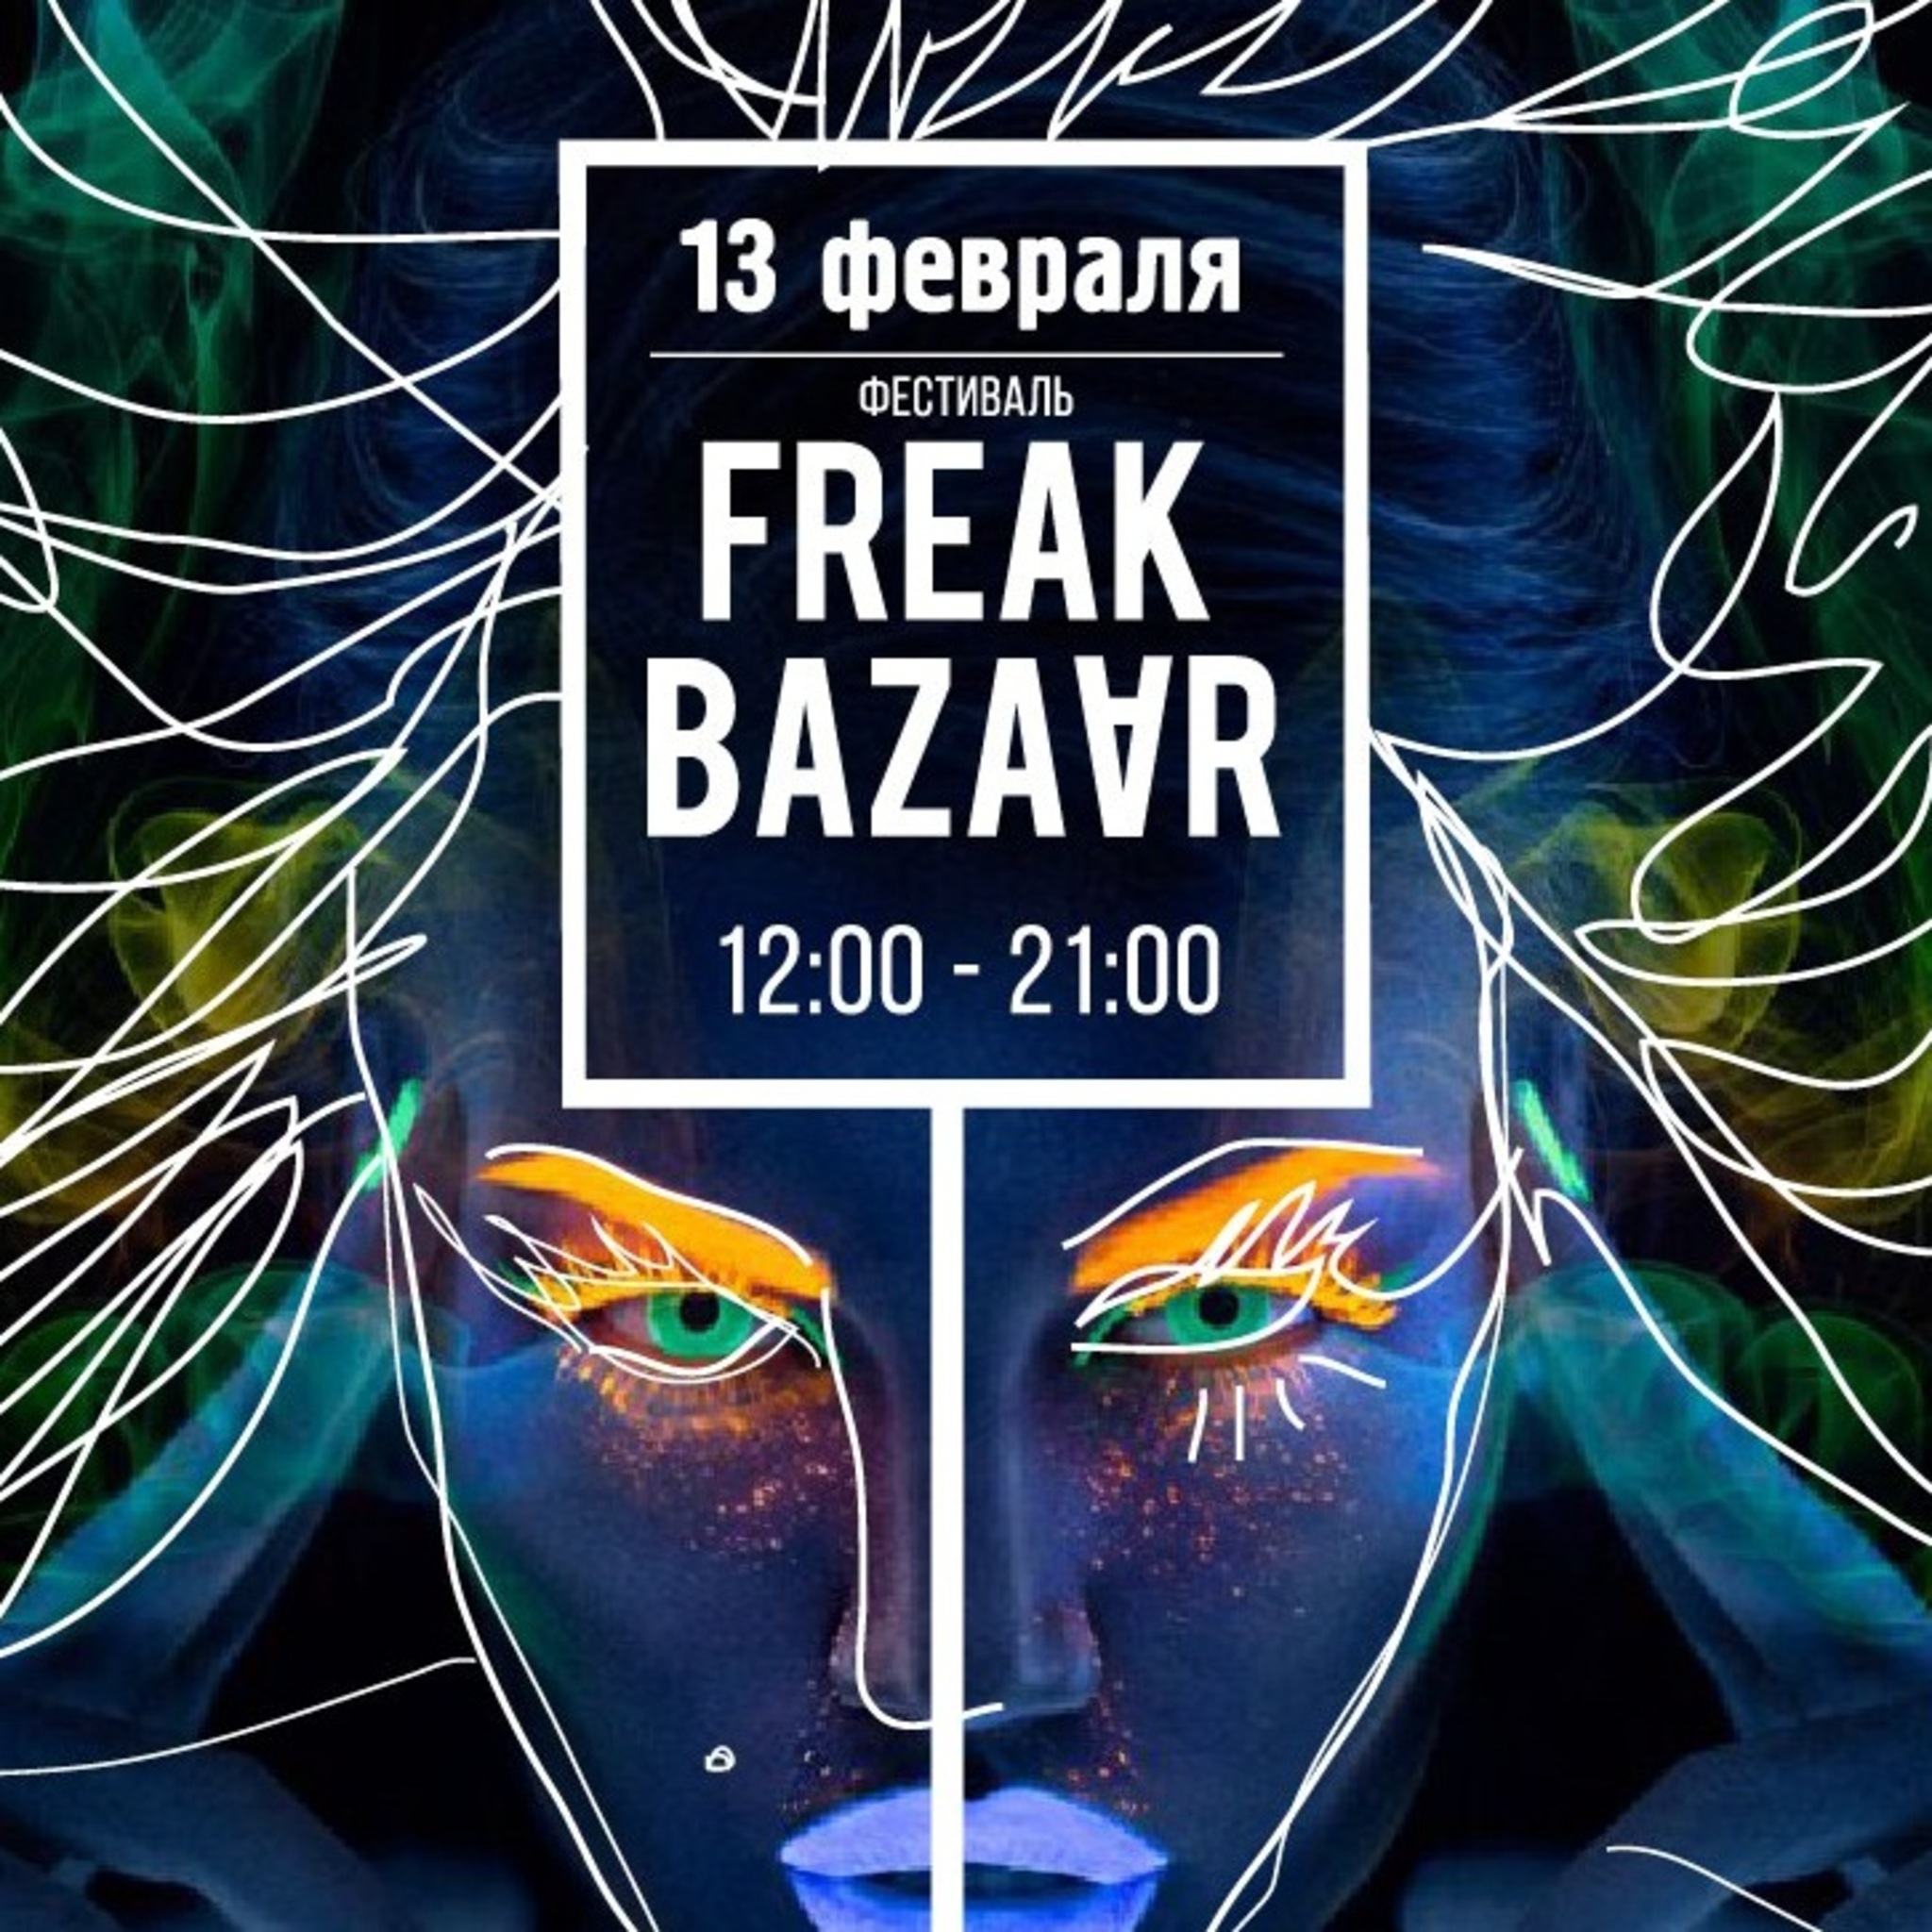 Festival Freak Bazaar